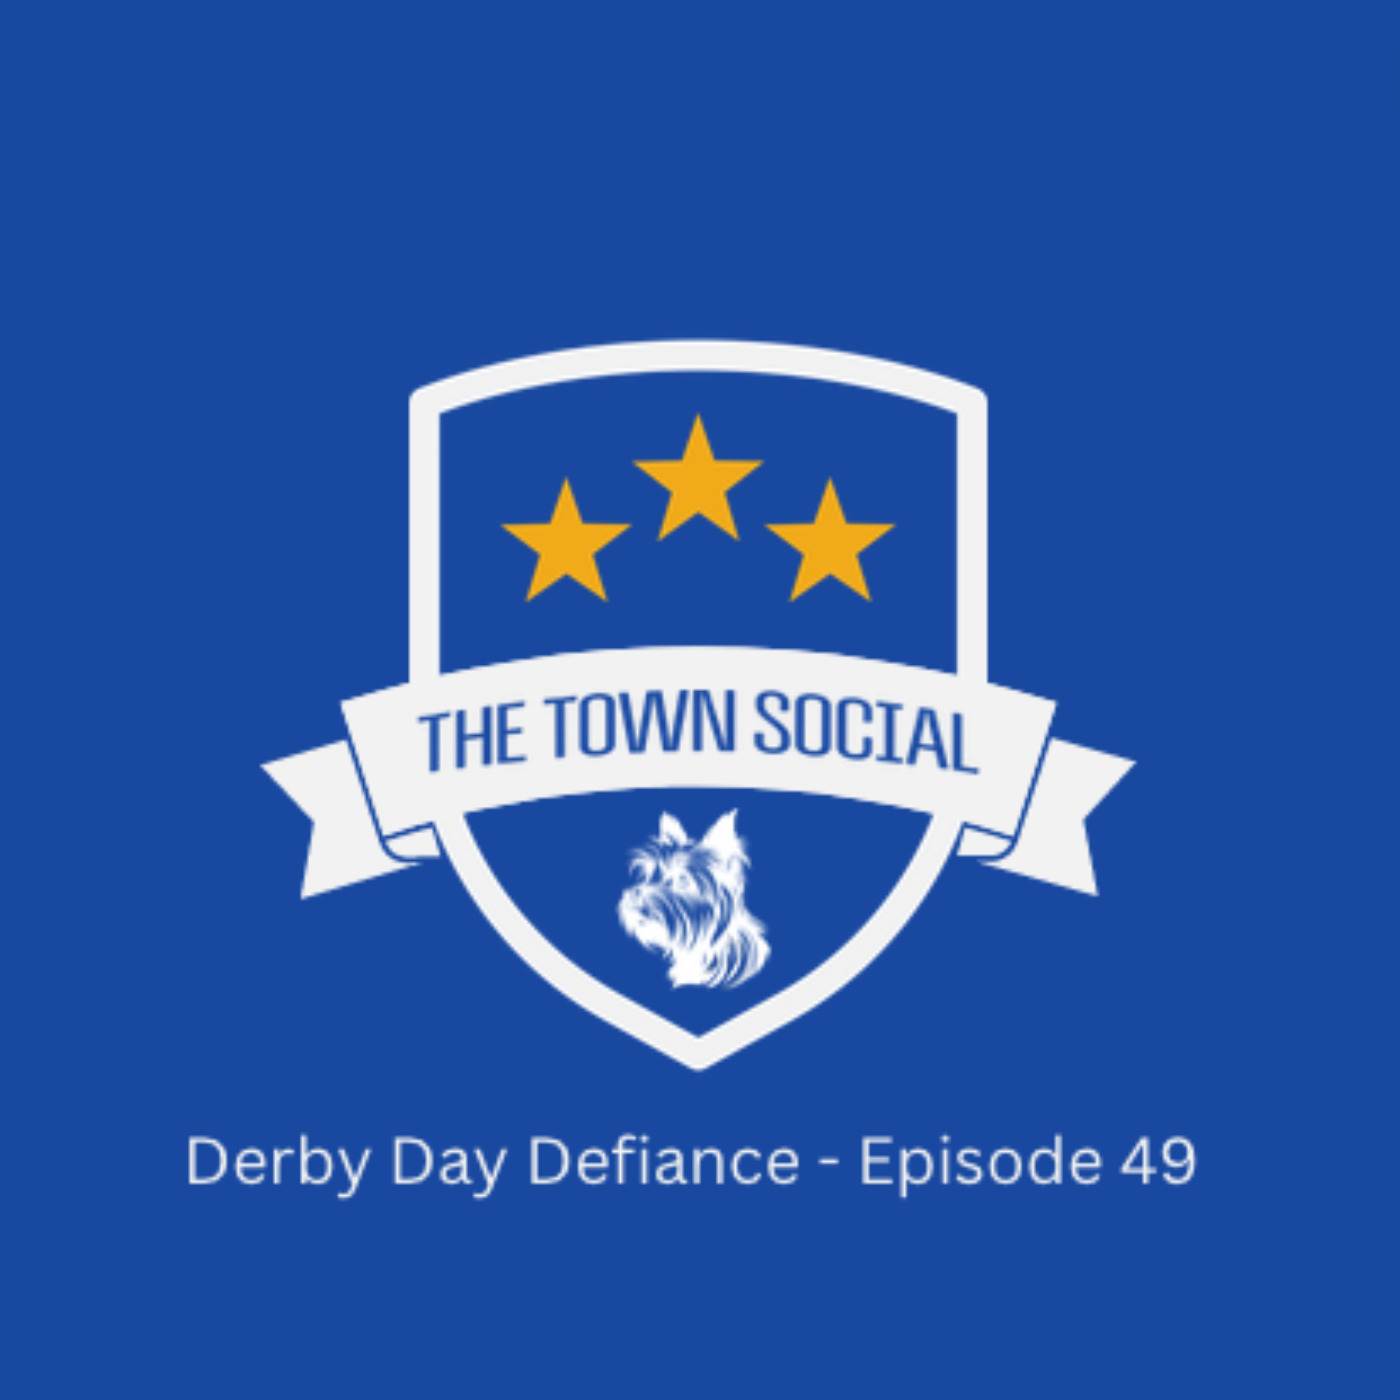 Derby Day Defiance - Huddersfield Town Social - Episode 49